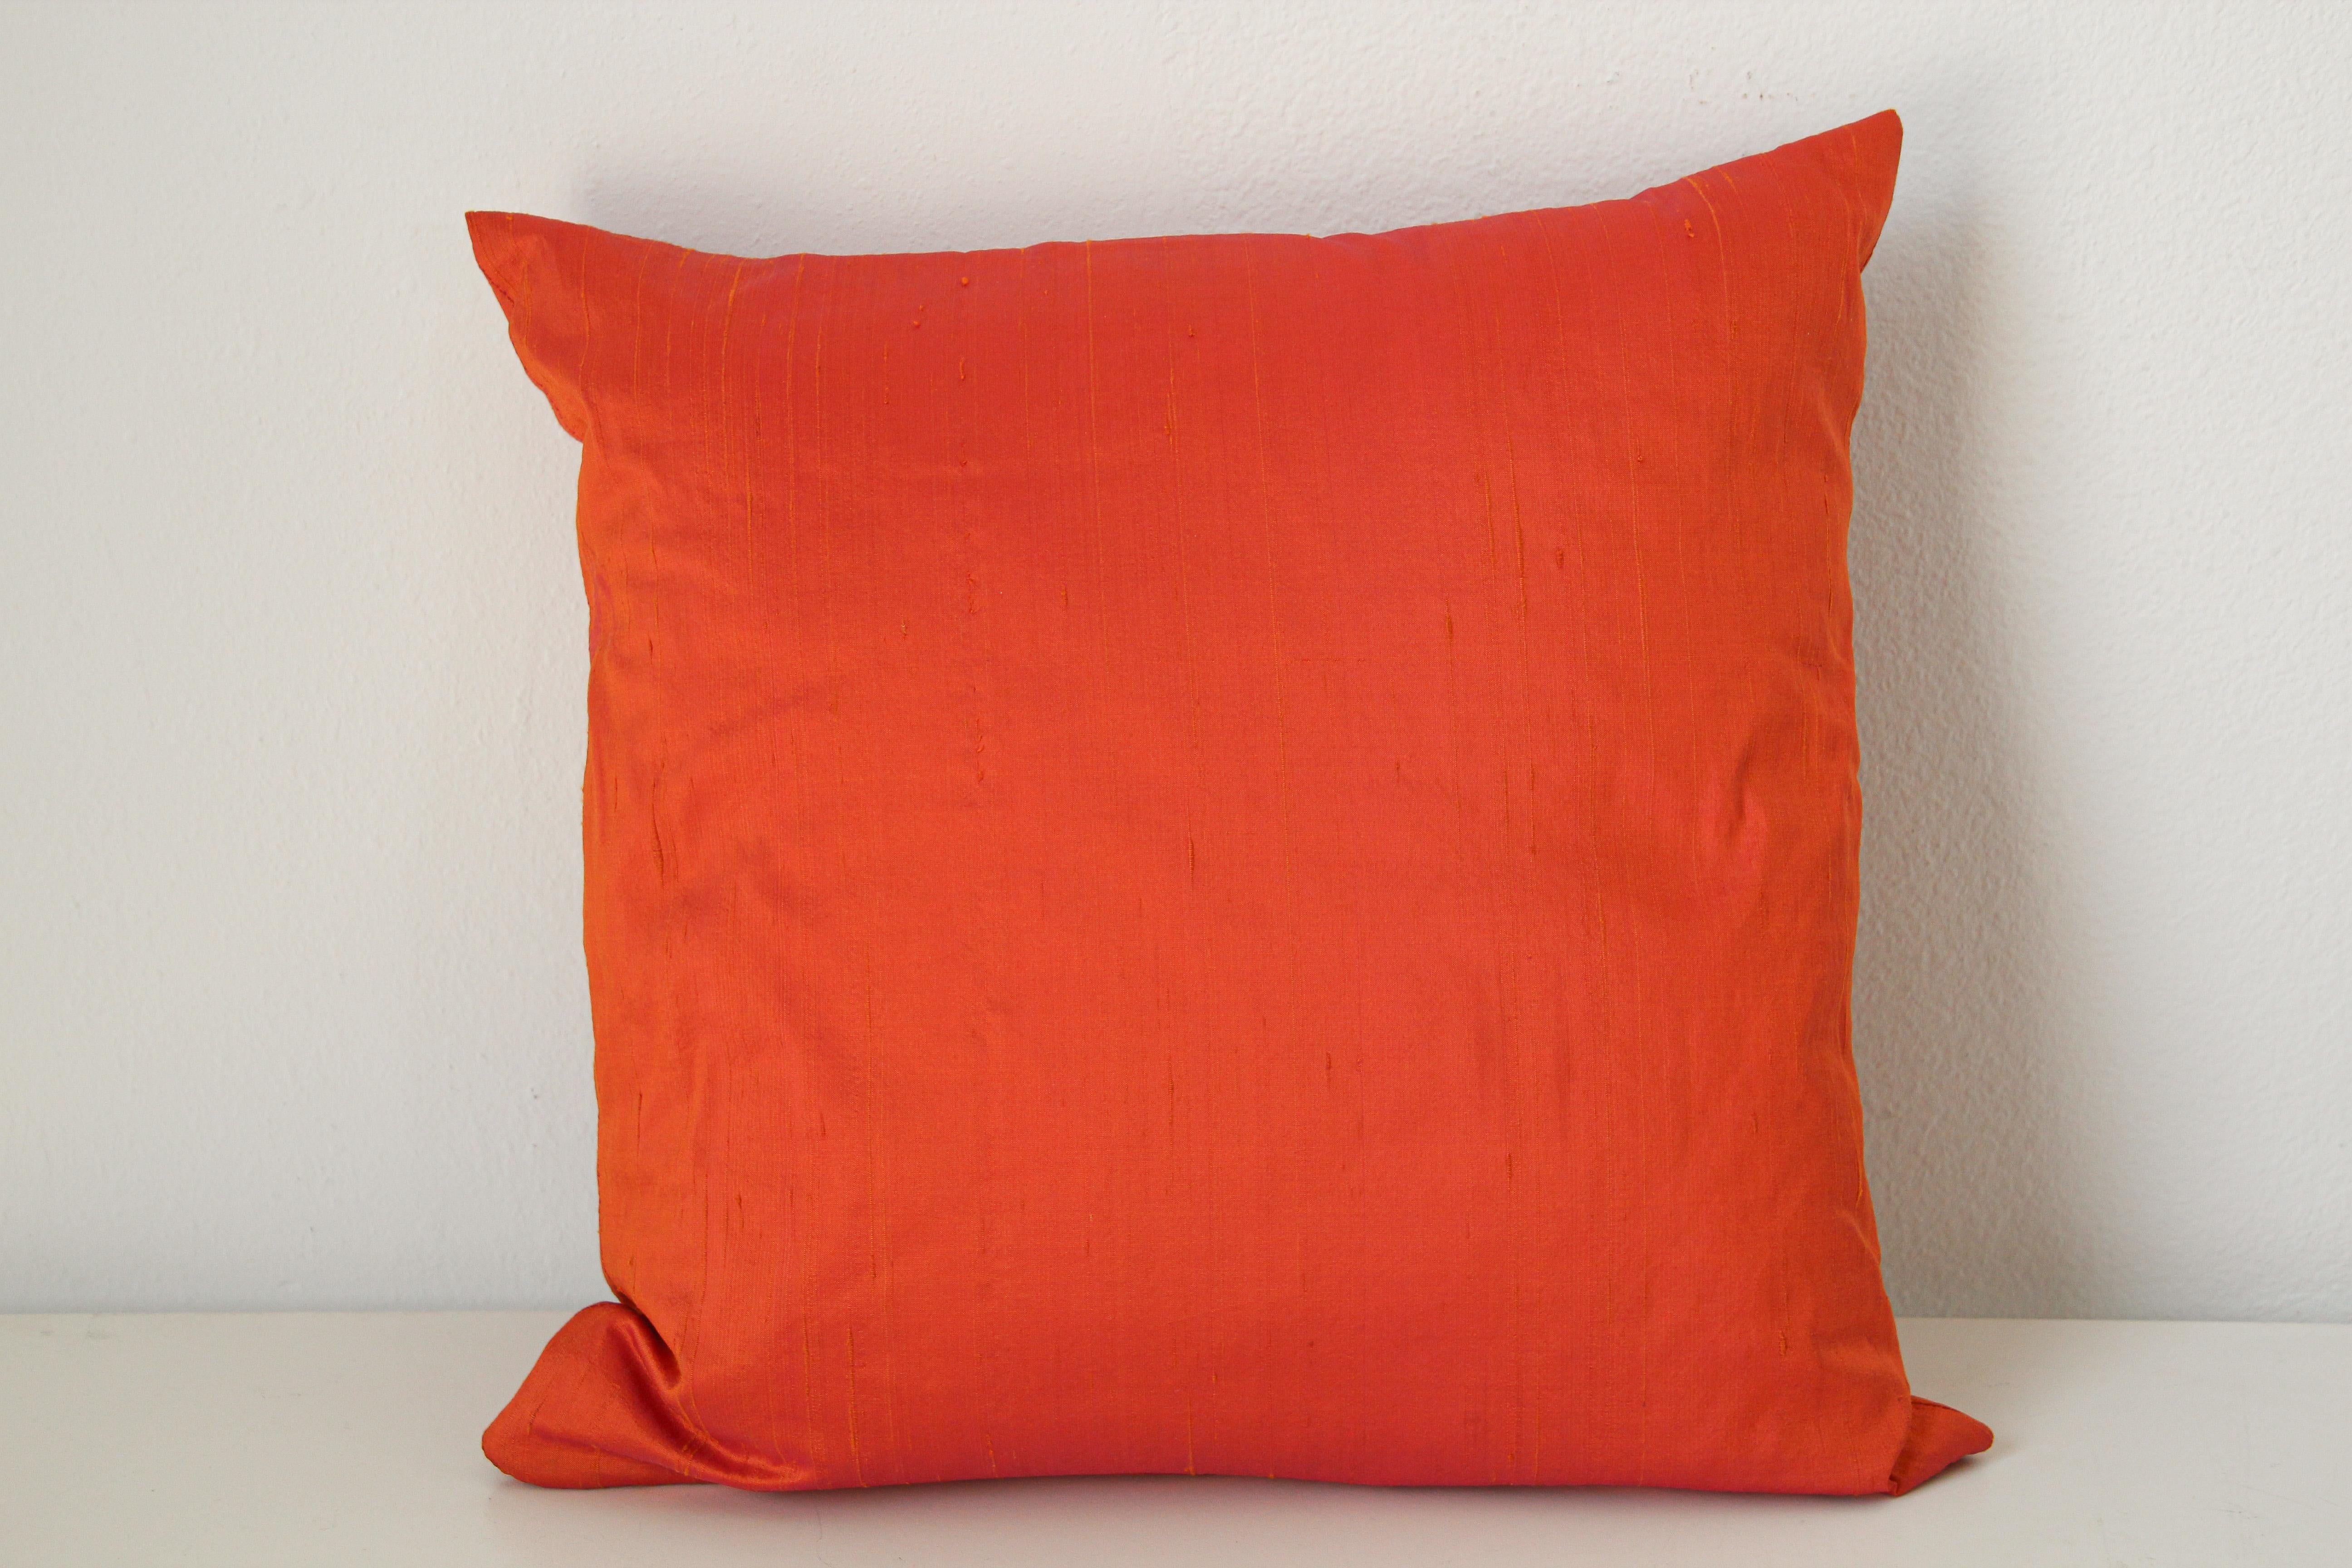 Asian decorative burnt orange raw silk throw pillow.
Luxury silk in burnt orange raw silk.
Handmade in India.
Zipper closure, down insert.